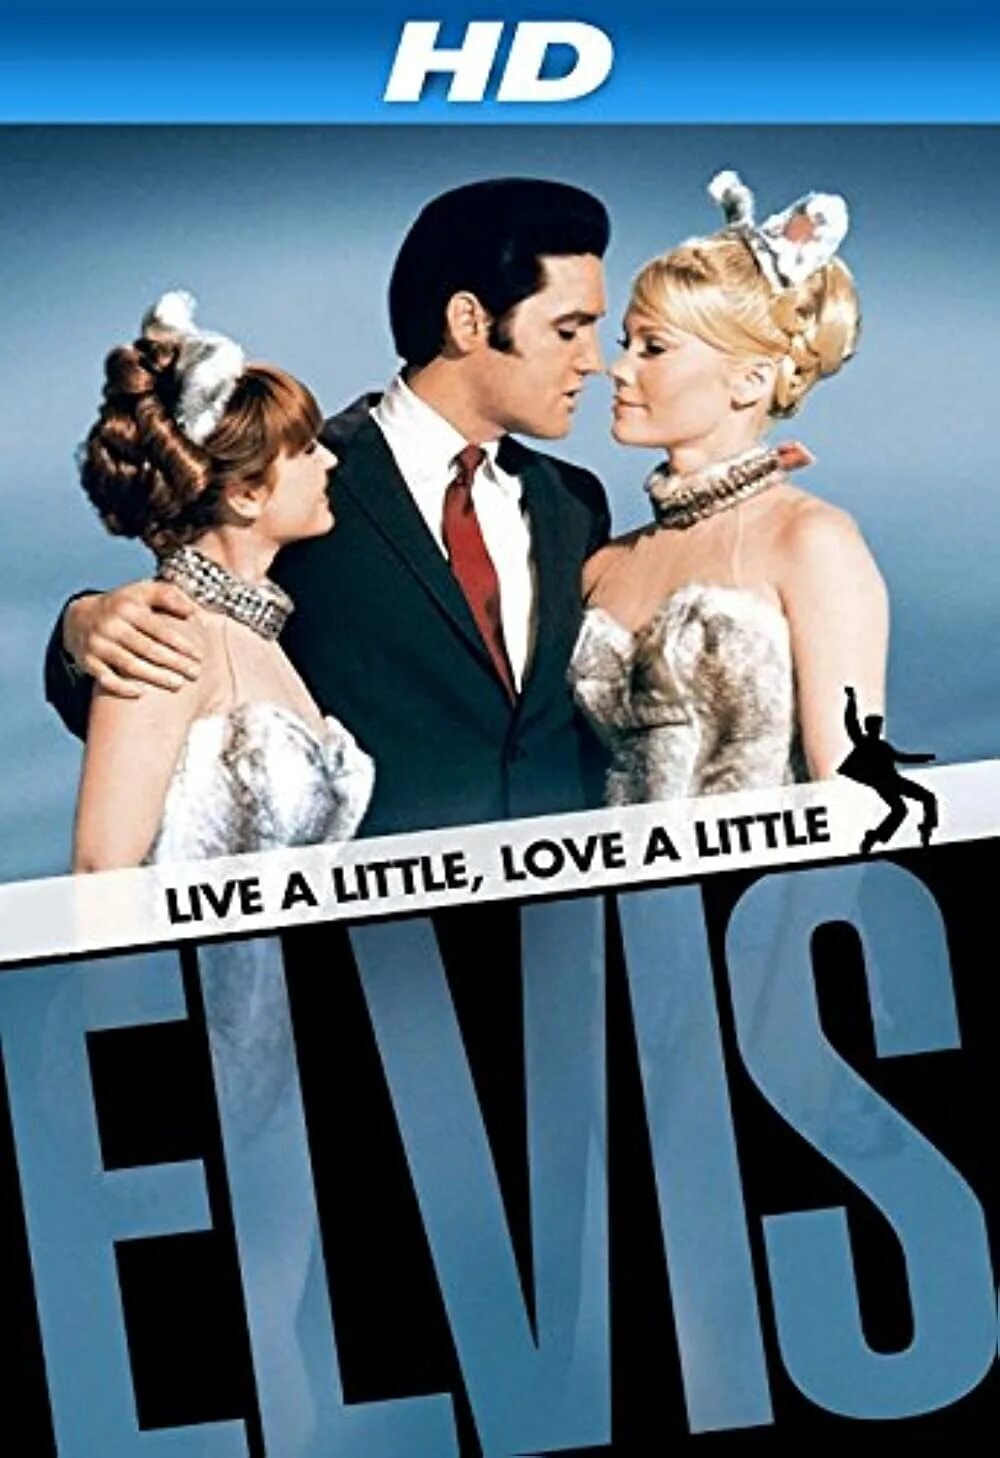 Live a little, Love a little 1968. Elvis Presley 1968. Michele Carey 1968. Мюзикл мелодрама